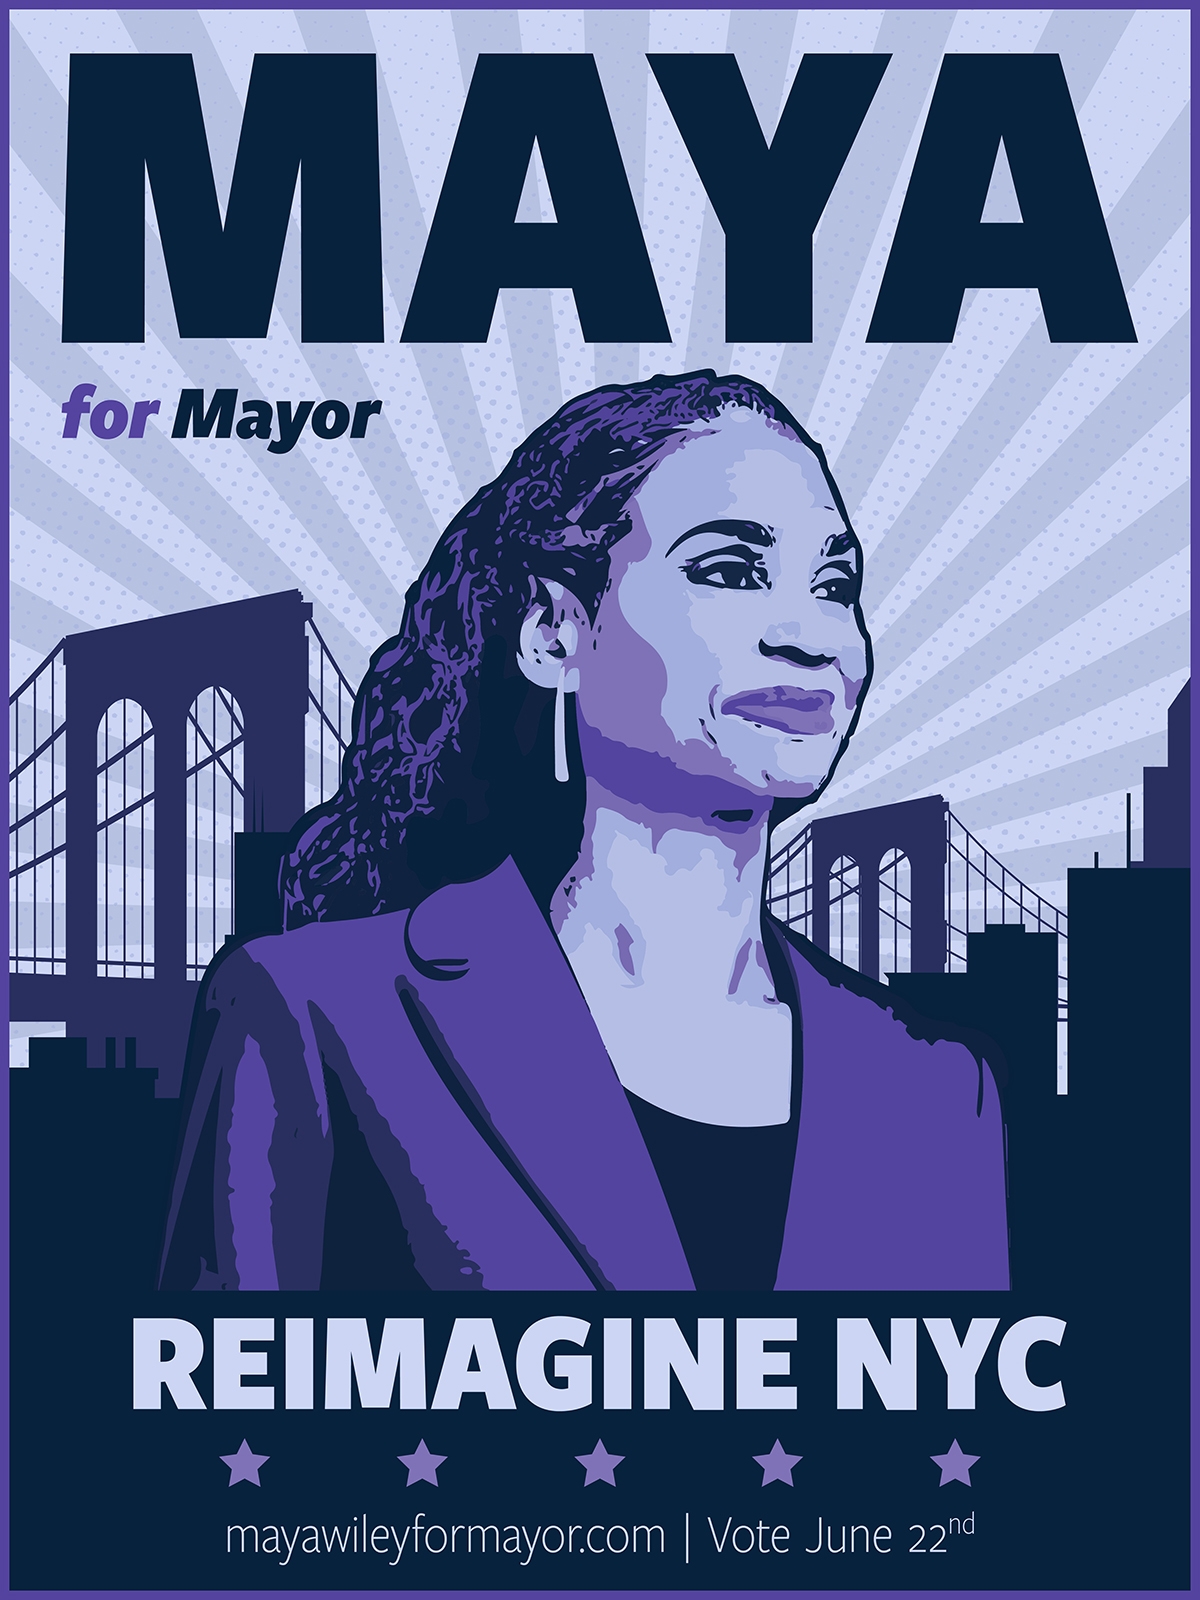 Maya Wiley for Mayor